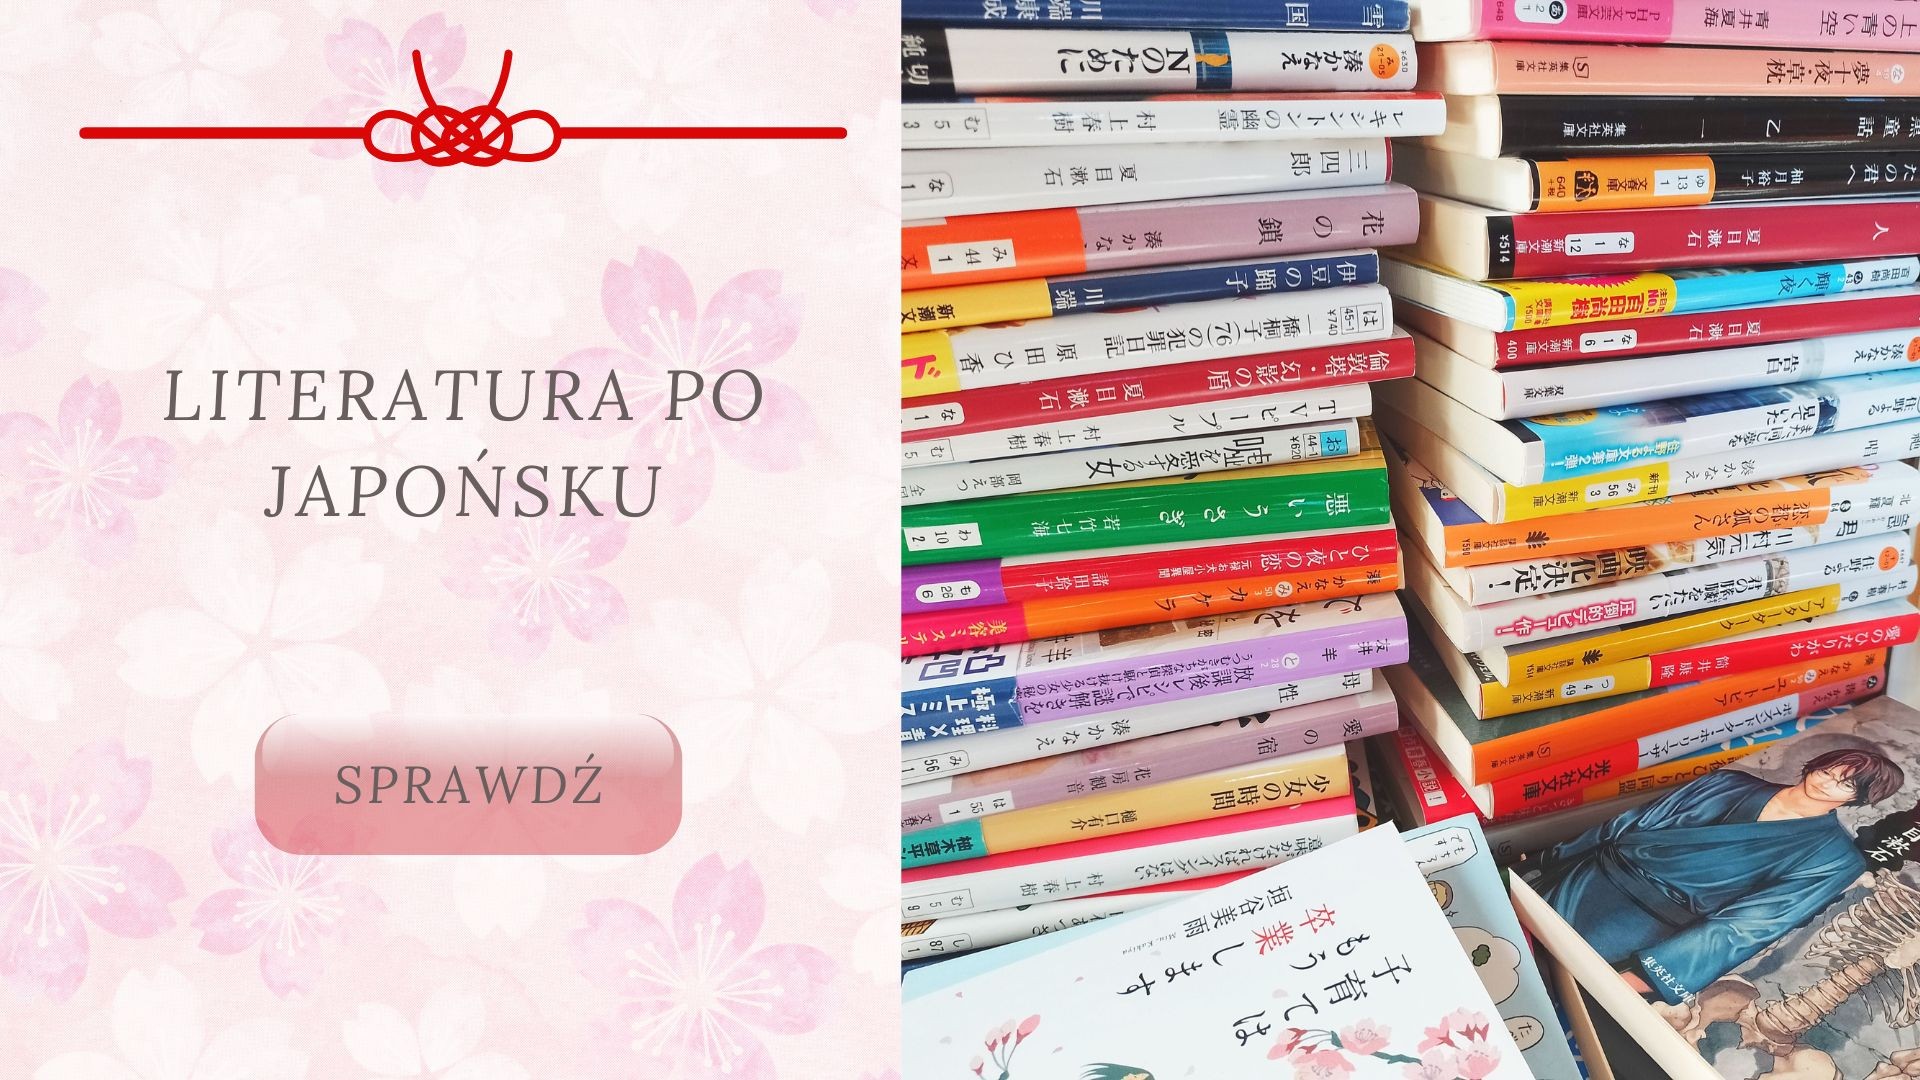 Literatura po japońsku